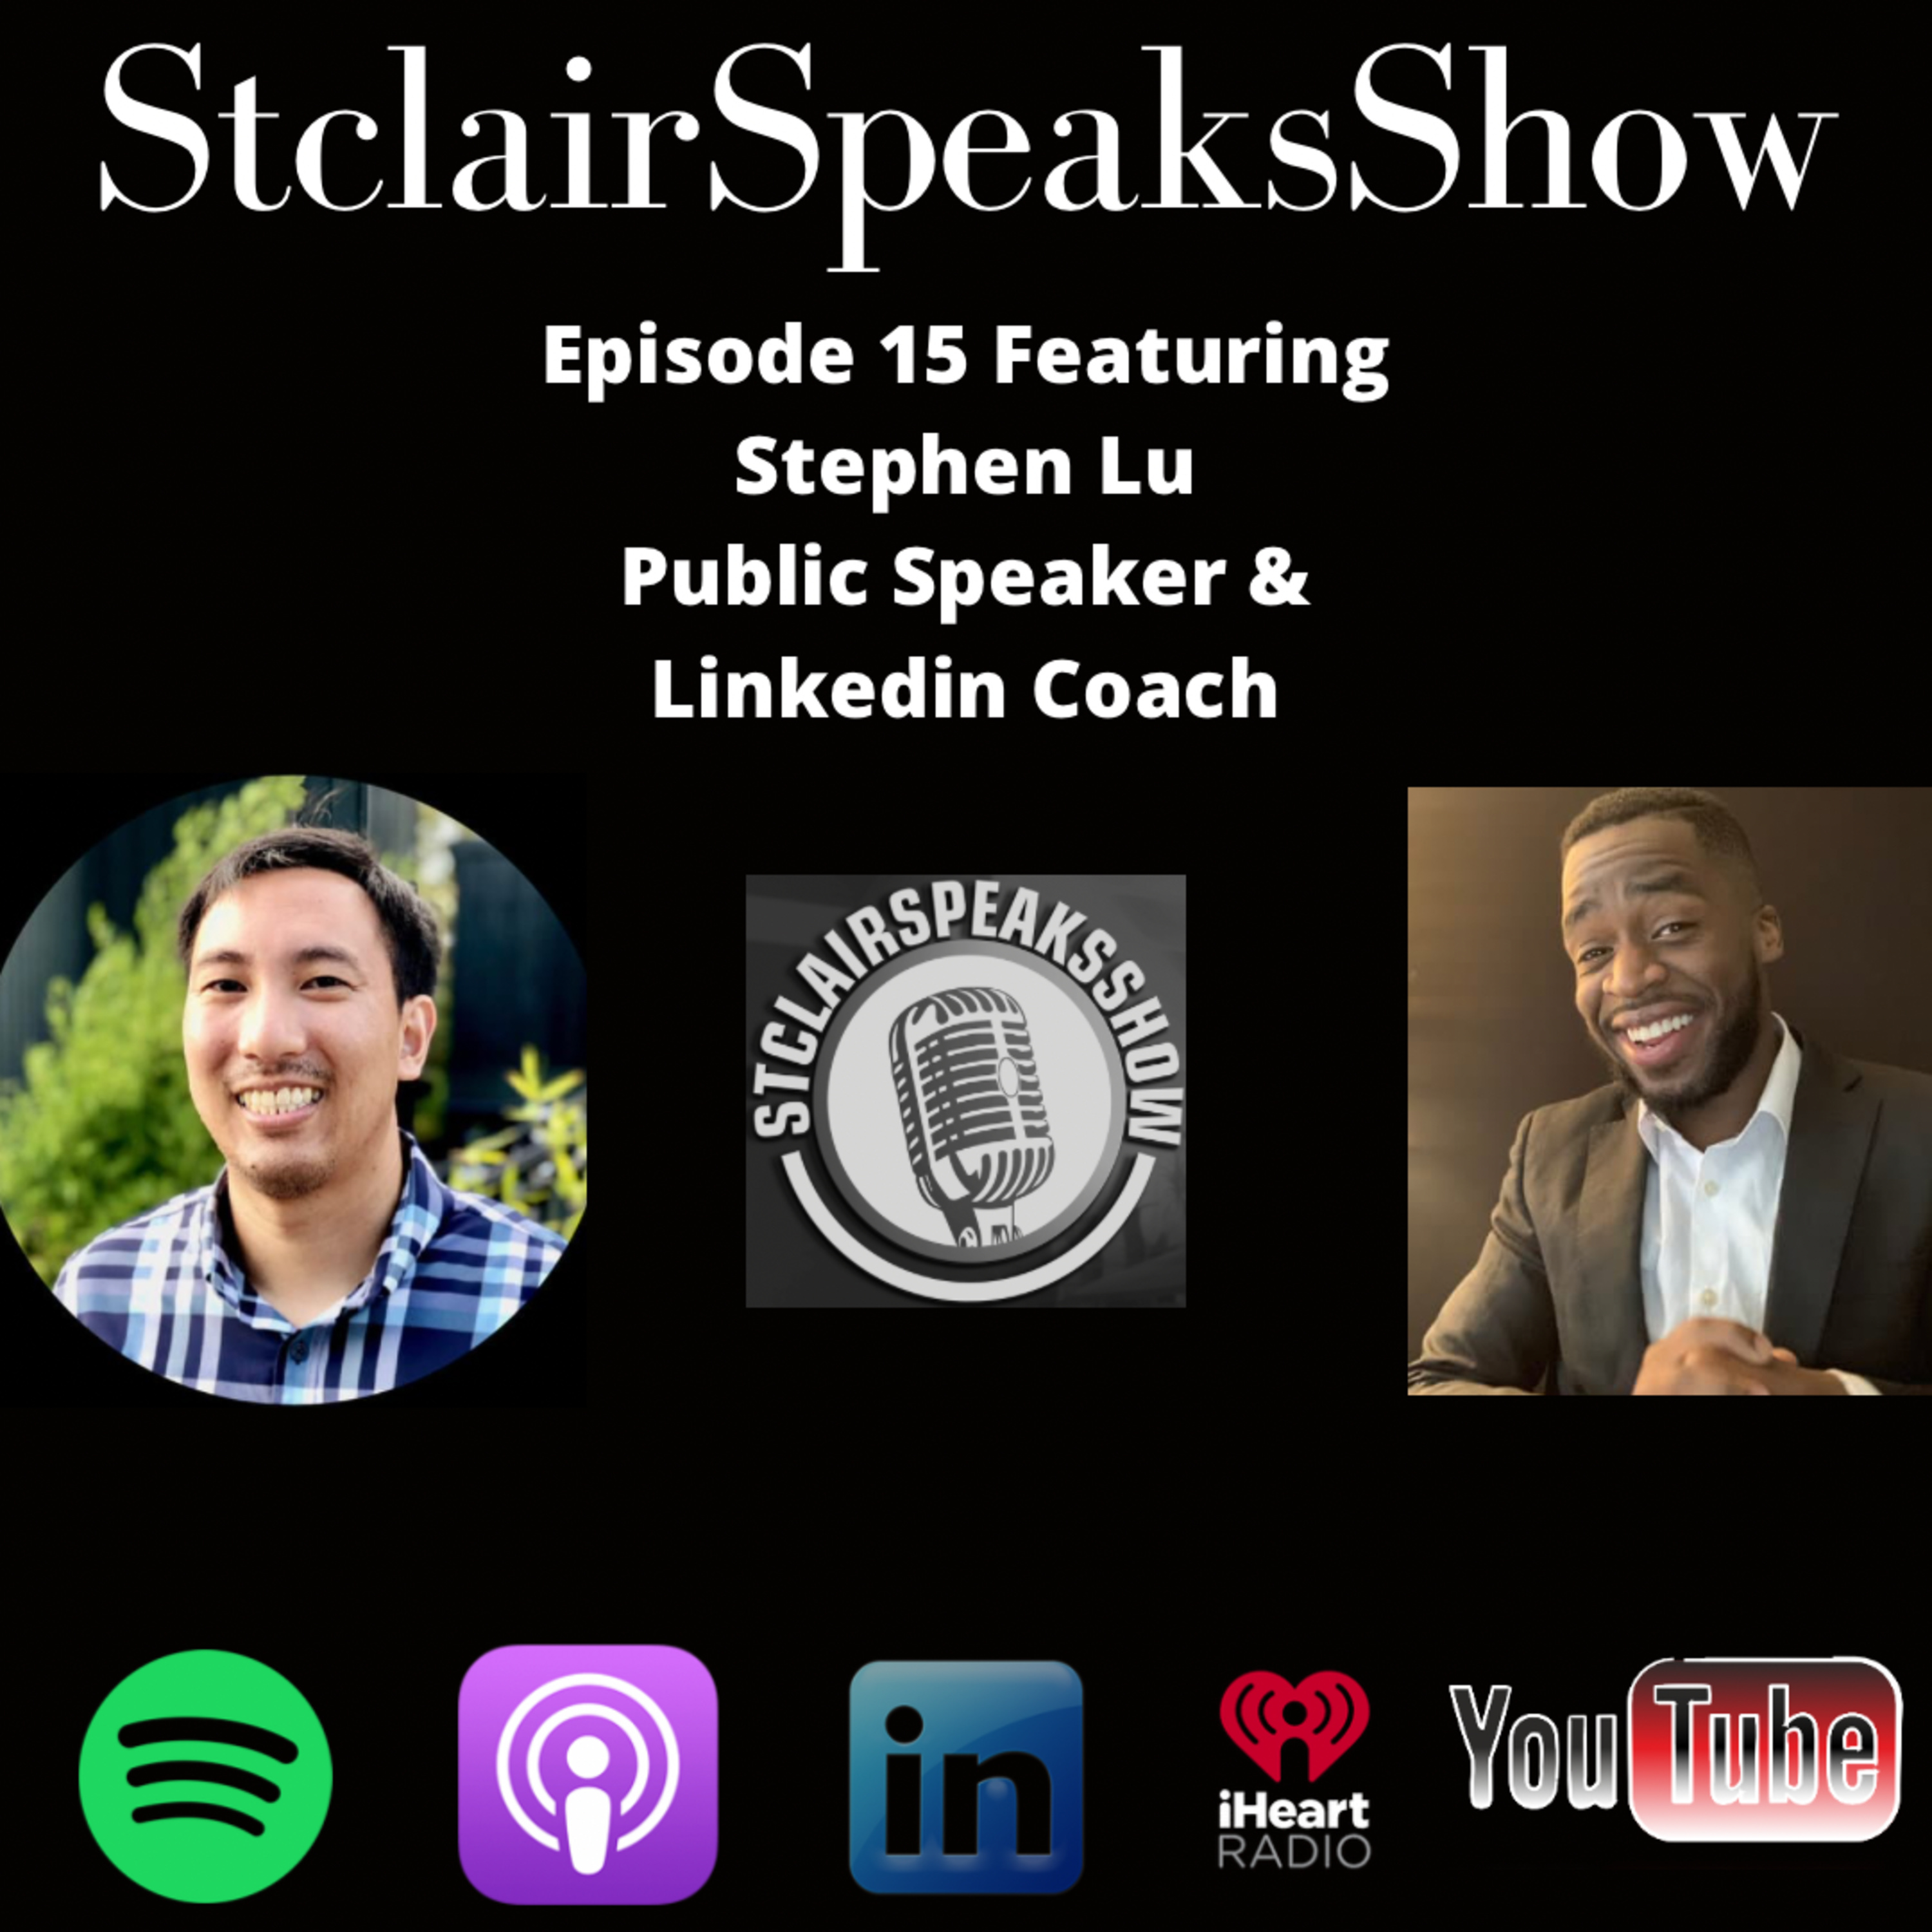 The StClairSpeaks Show Episode 15 Featuring Stephen Lu Public Speakser & Linkedin Coach